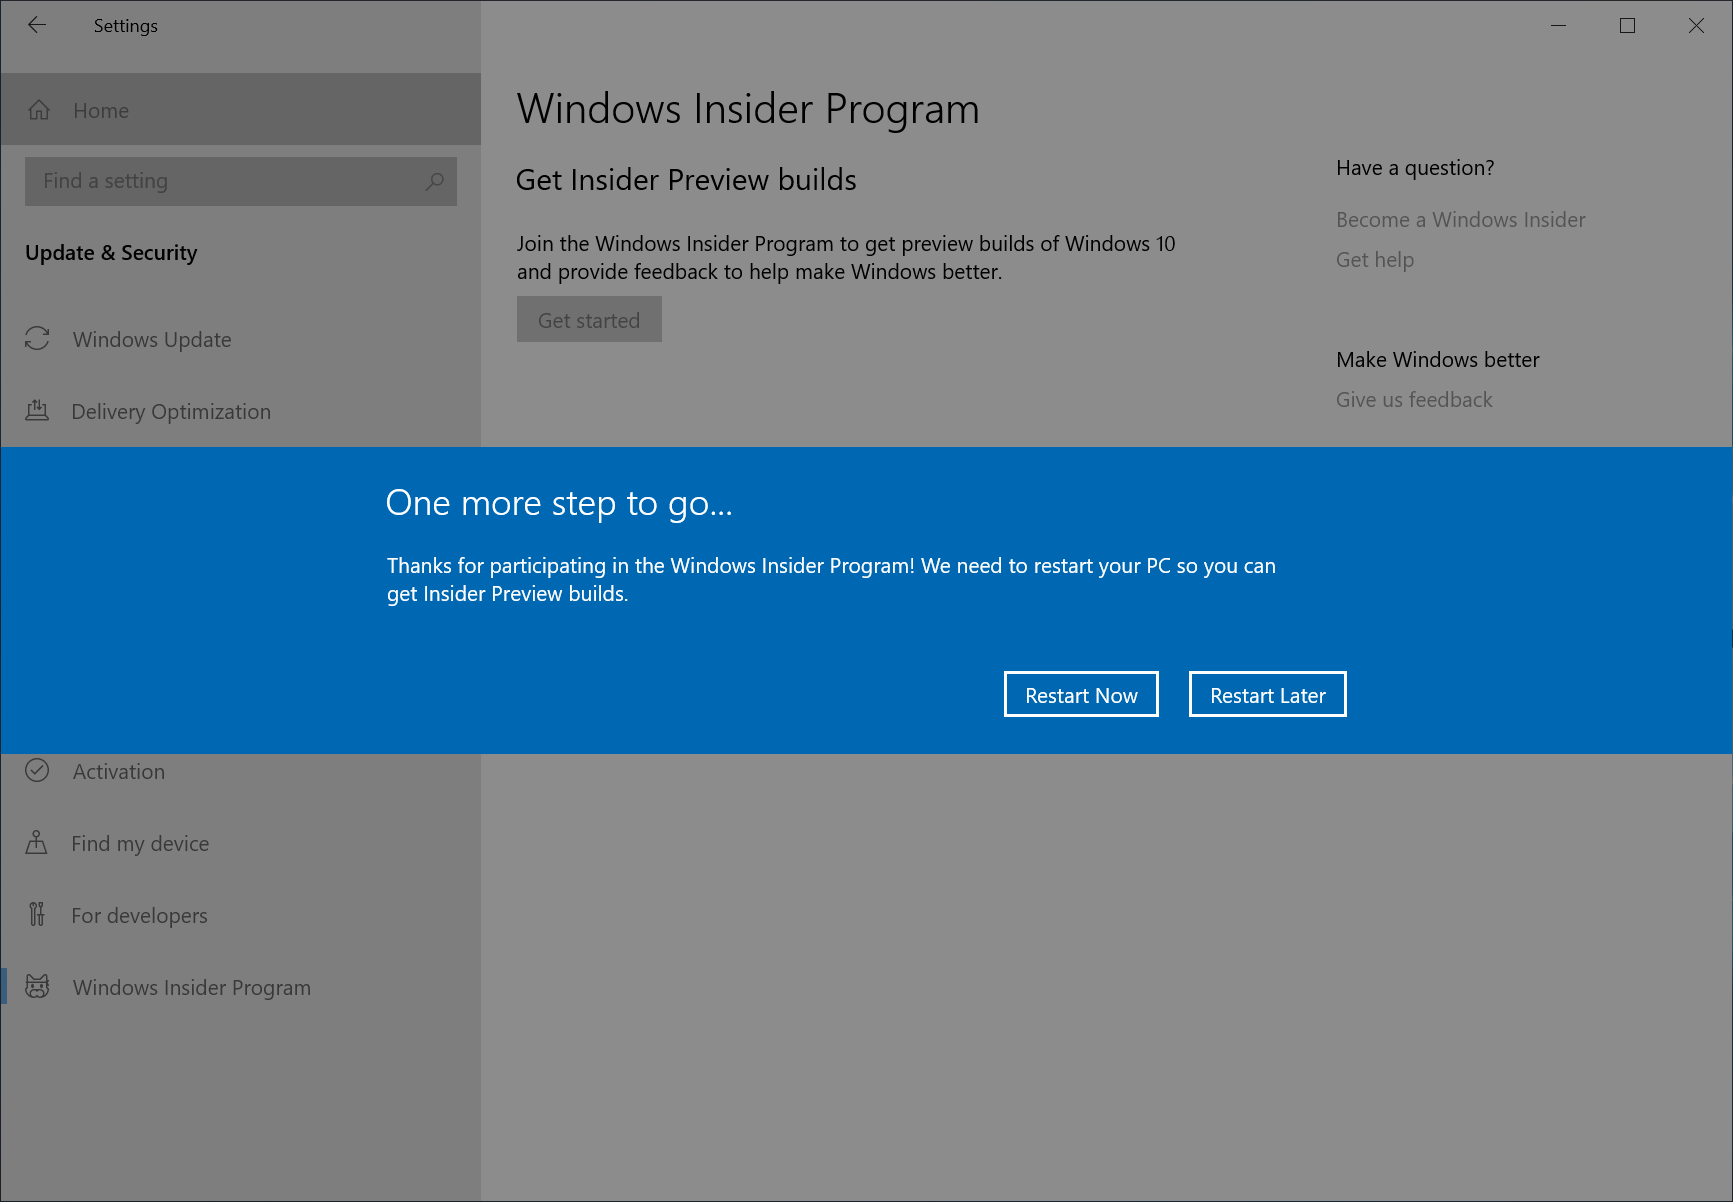 Windows 10 November 2019 Update is one step closer to release 4db8c33b0af2534d824a84ec5626ab74.png